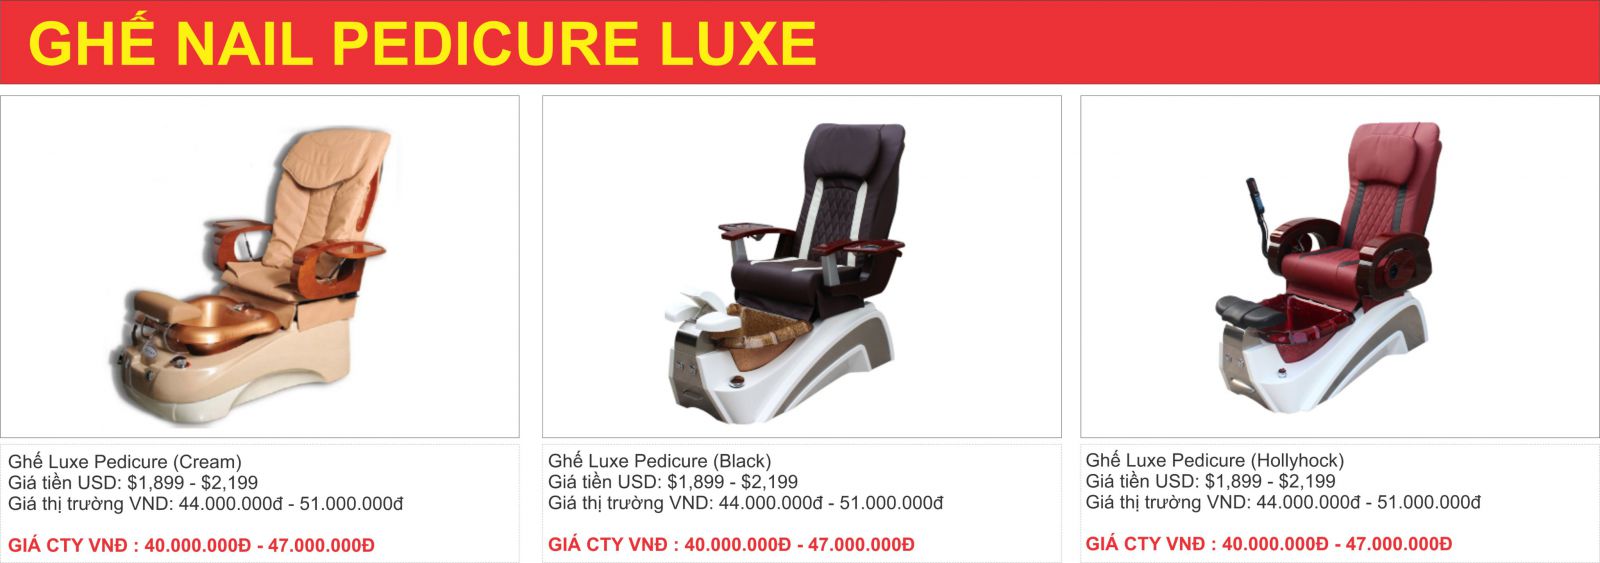 ghế nail pedicure LUXE